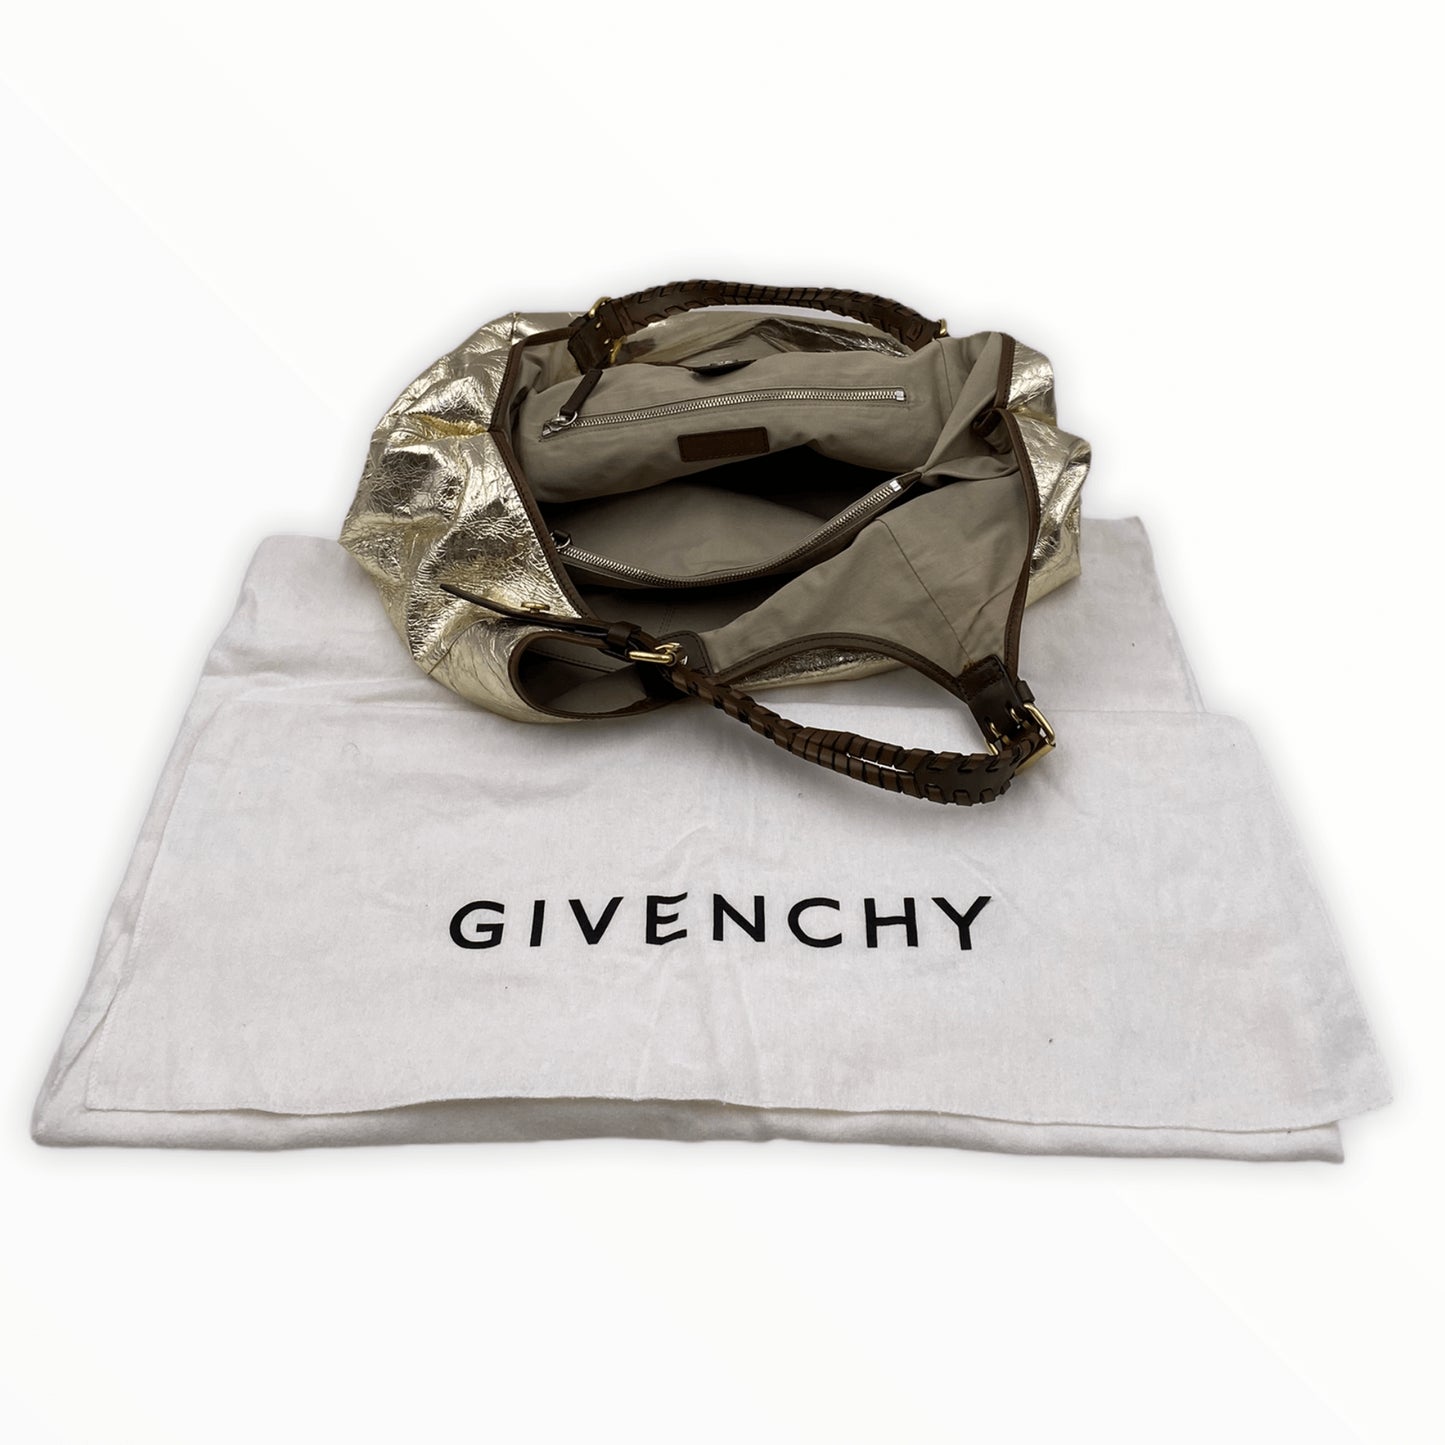 Borsa Givenchy in pelle